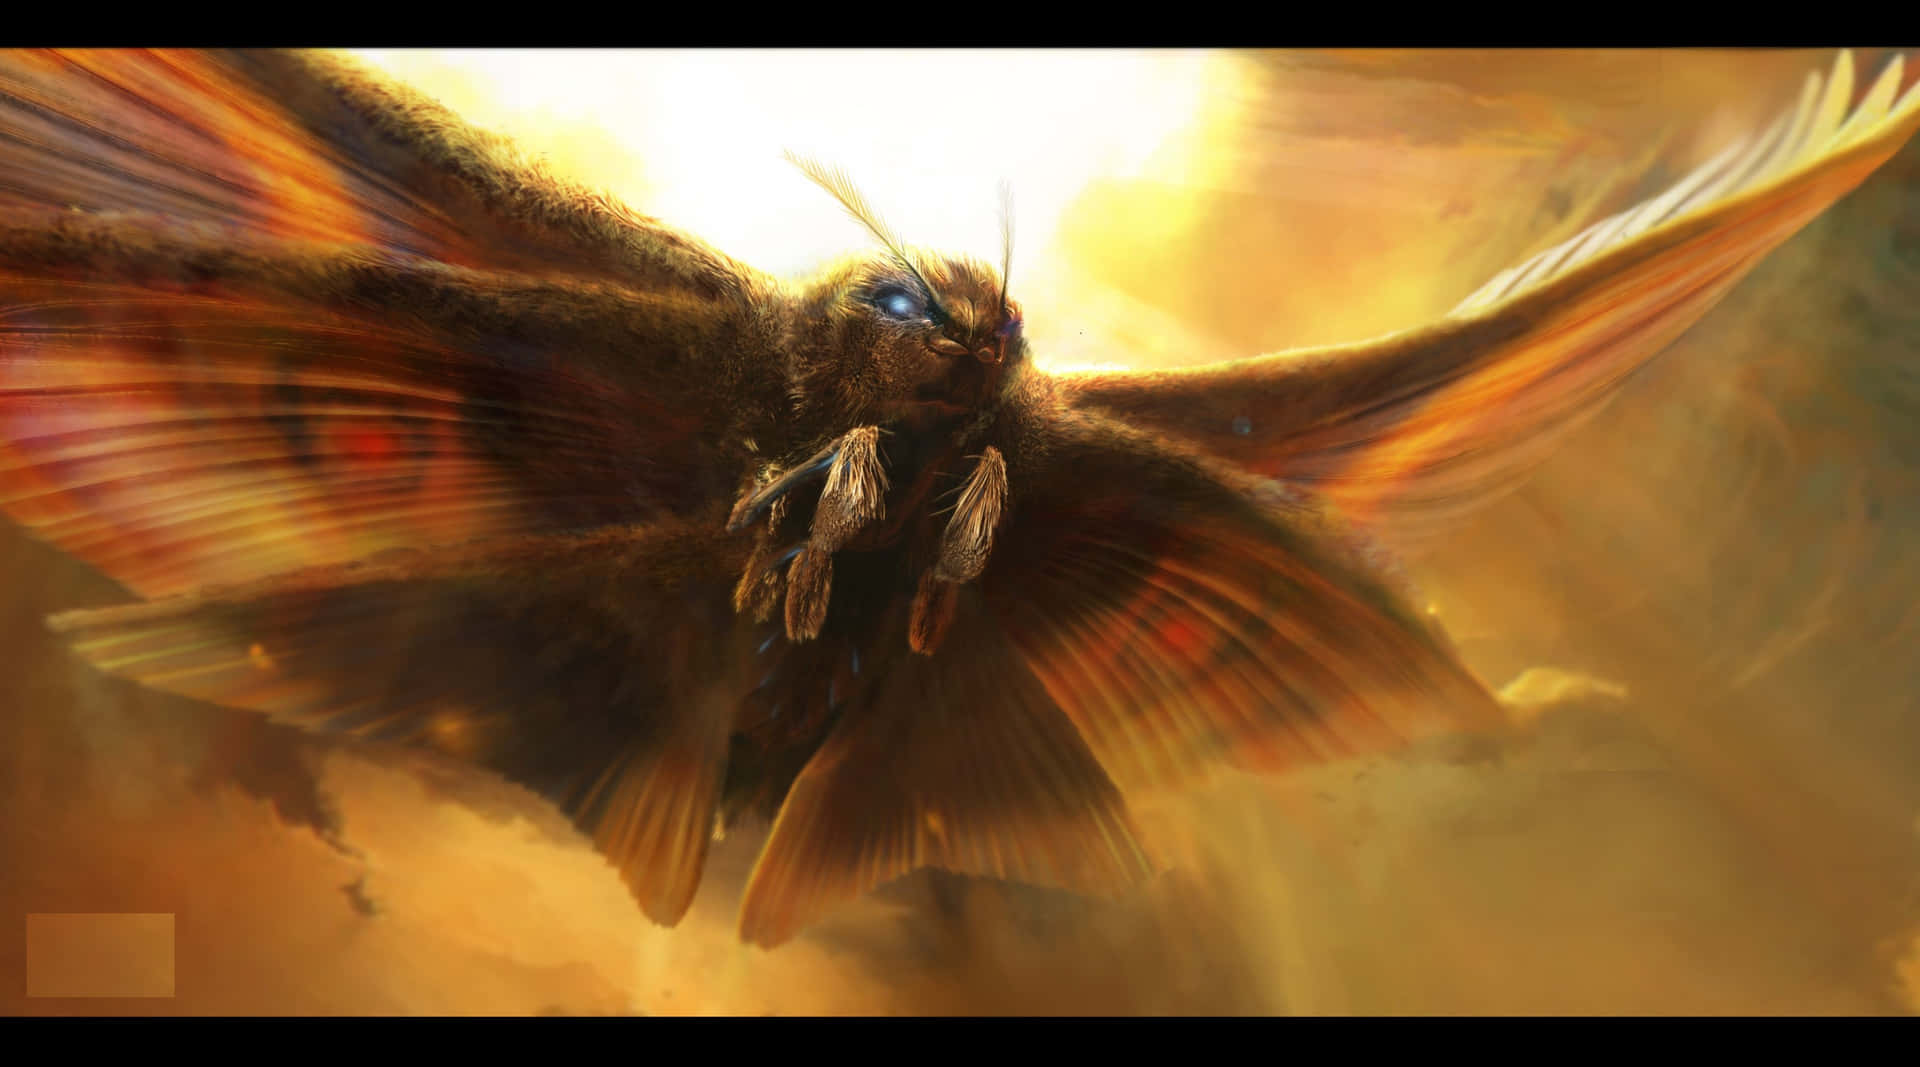 Majestic Mothra spreading its wings Wallpaper